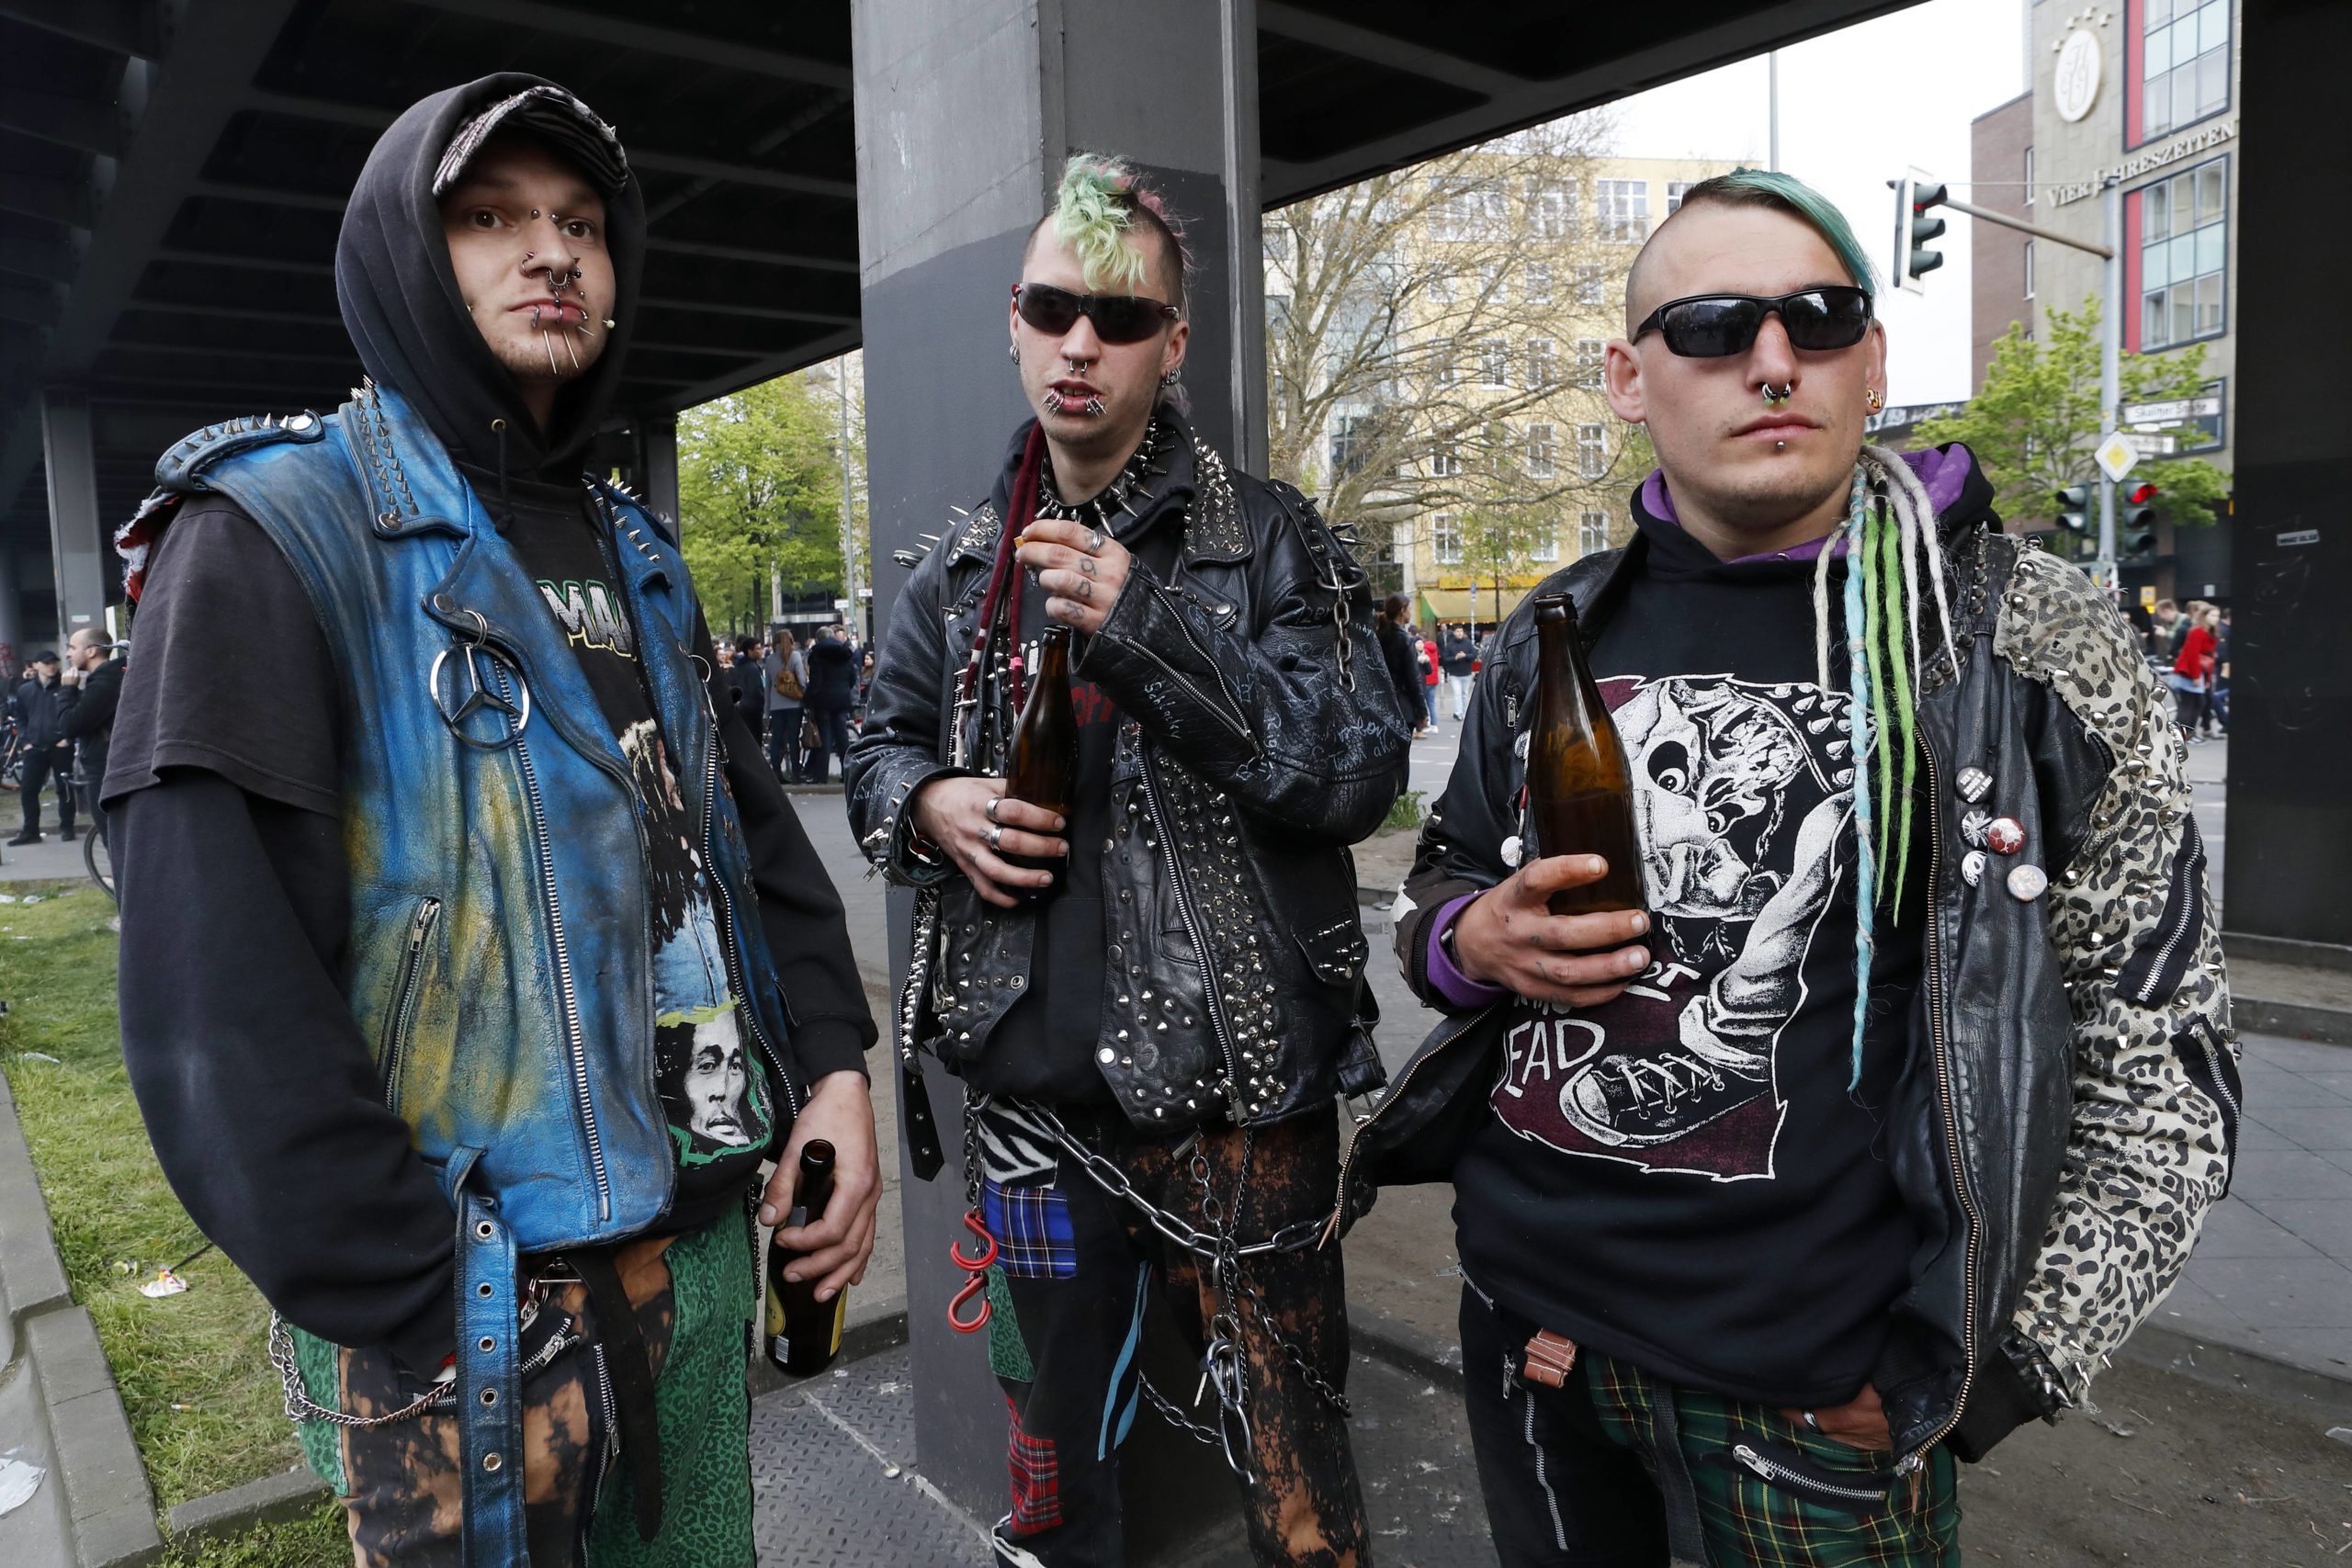 Punks in Berlin: Punks bei einer Demonstration, 2017. Foto: Imago/Gerhard Leber